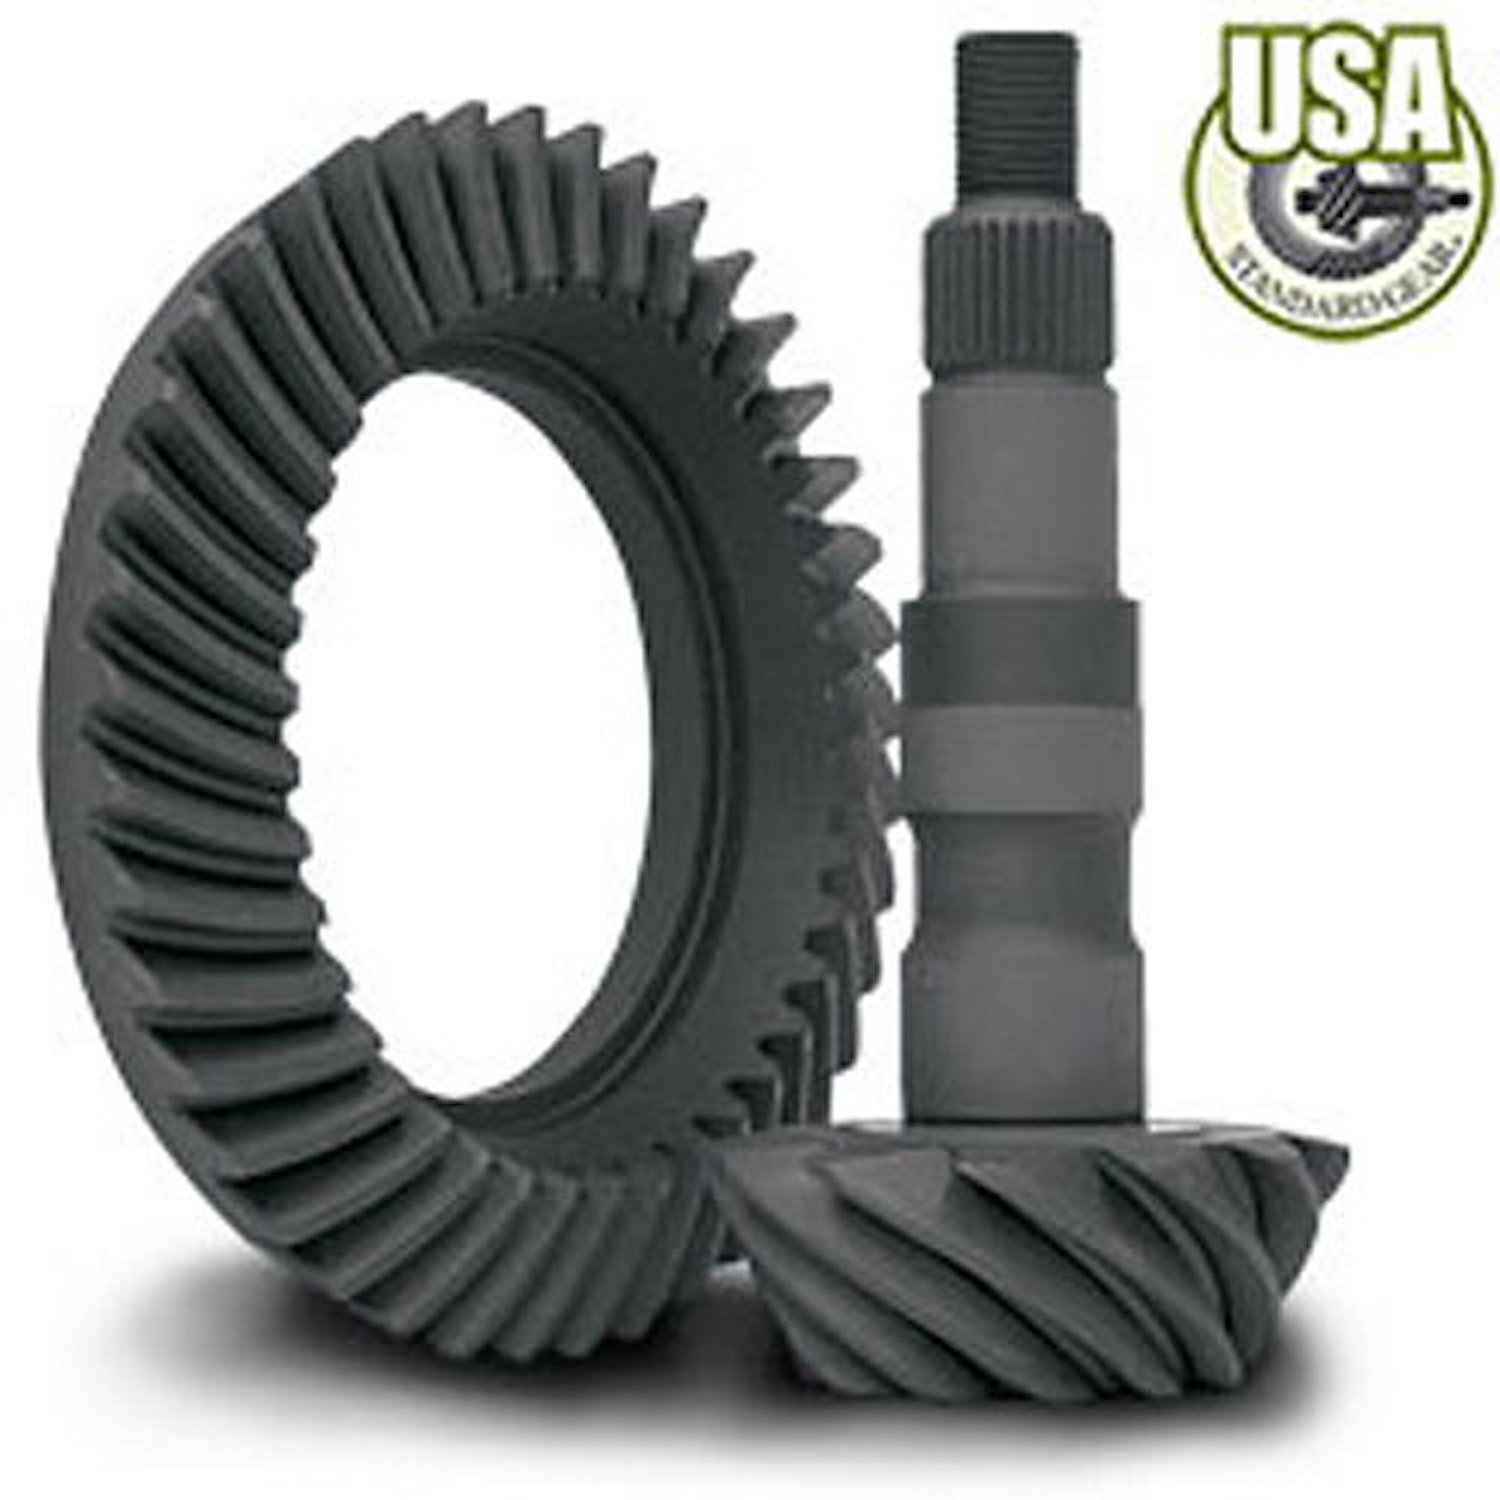 USA Standard Ring & Pinion Gear Set GM 8.2"